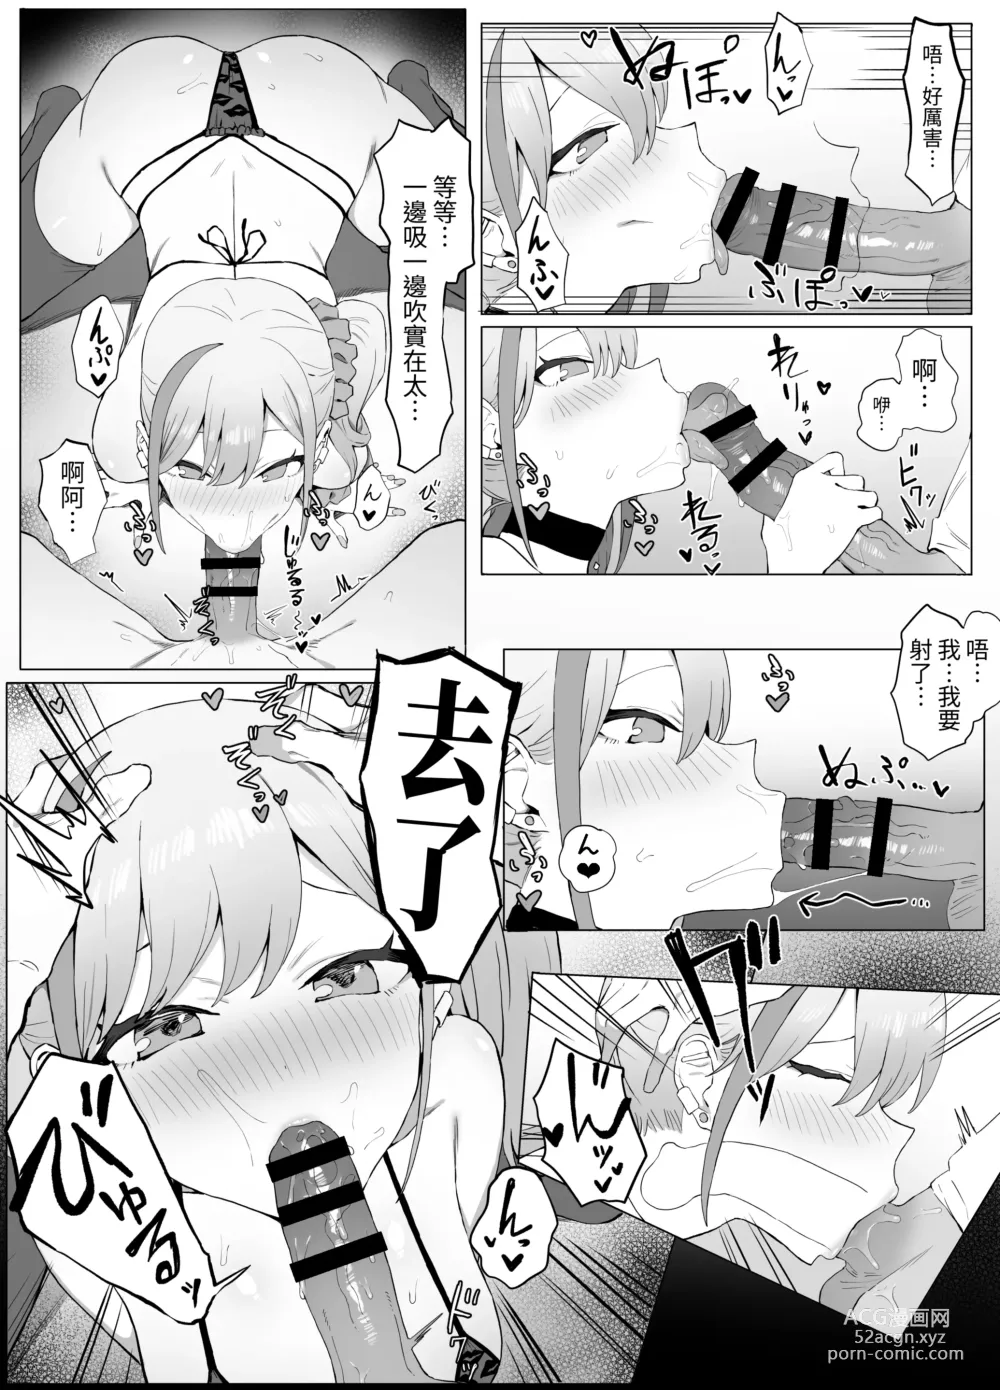 Page 7 of doujinshi Seikoui Jisshuu 2